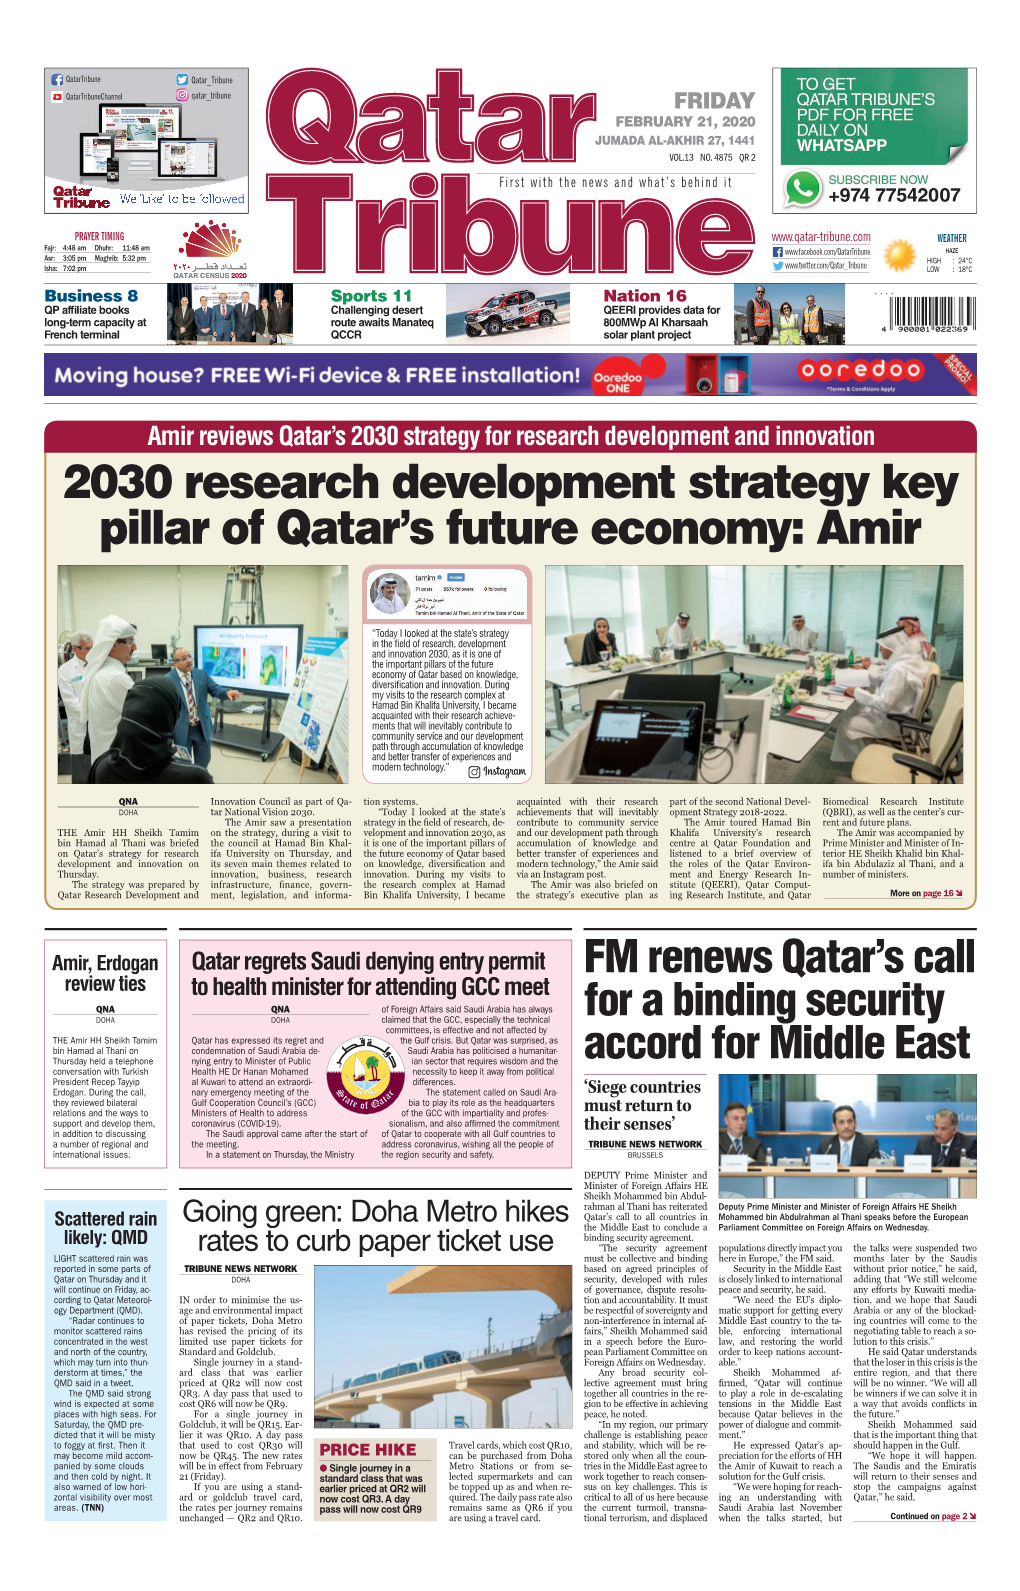 2030 Research Development Strategy Key Pillar of Qatar's